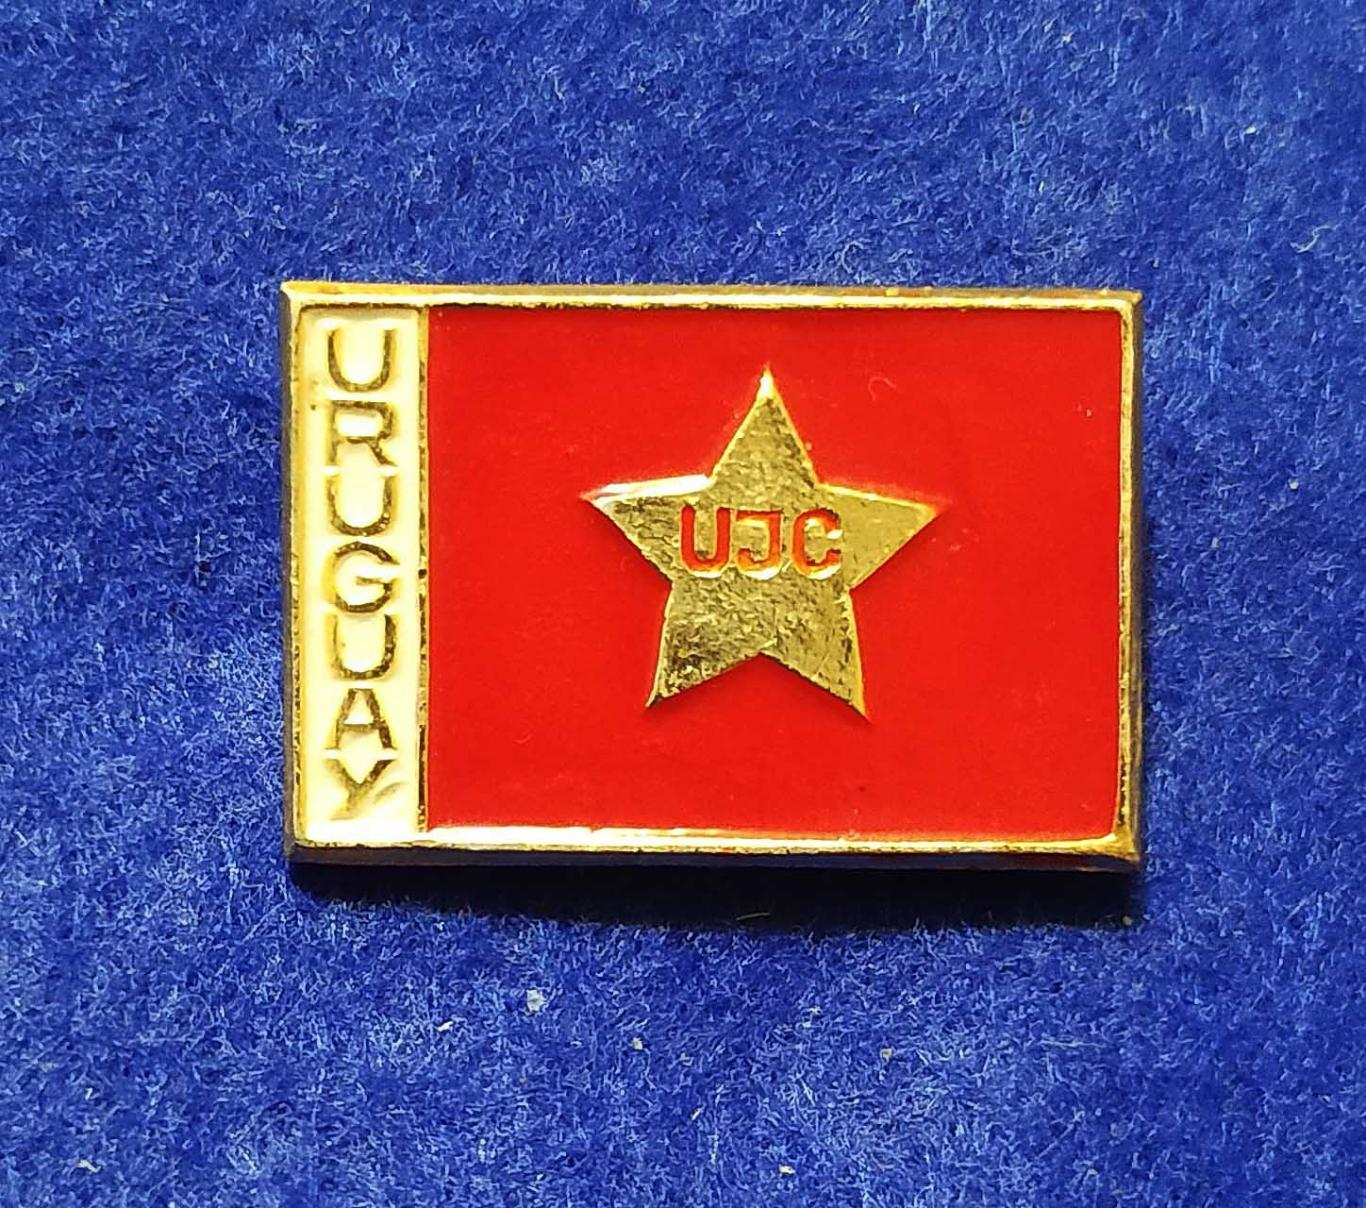 UJC-Союз коммунистической молодежи (Уругвай)__комсомол_UJC Uruguay_РЕДКИЙ